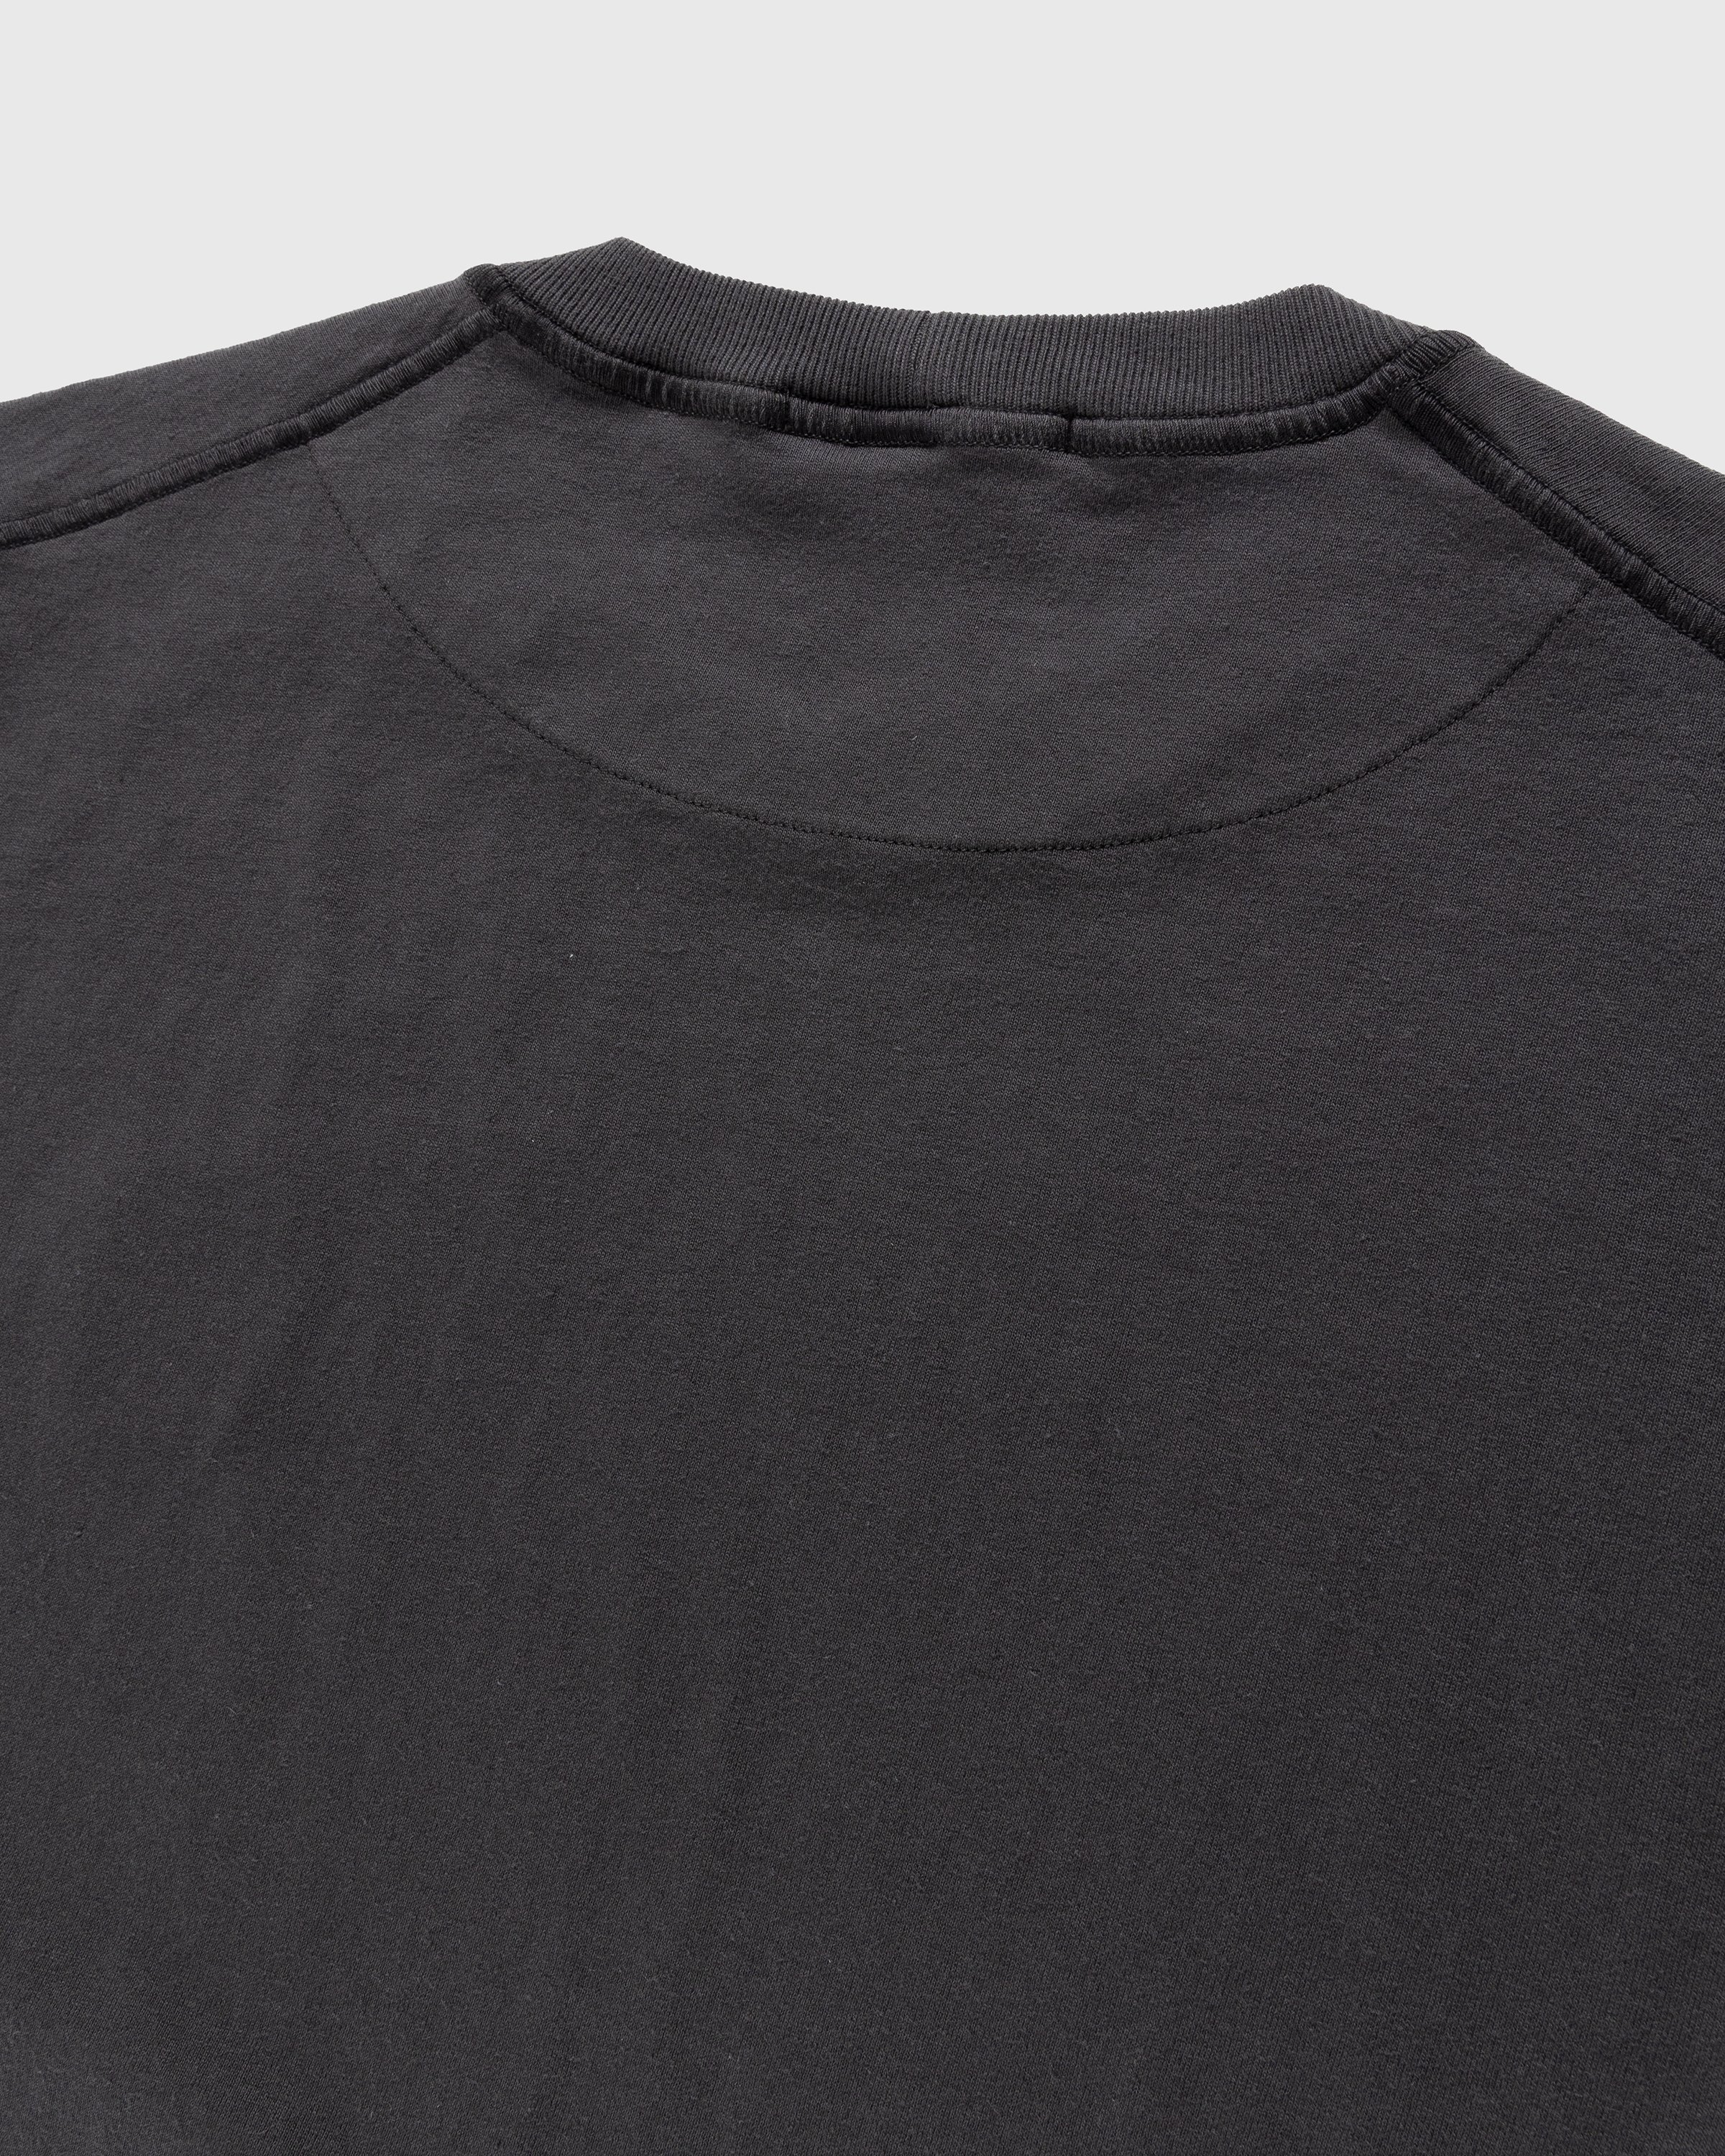 Stone Island - Fissato T-Shirt Charcoal - Clothing - Beige - Image 3